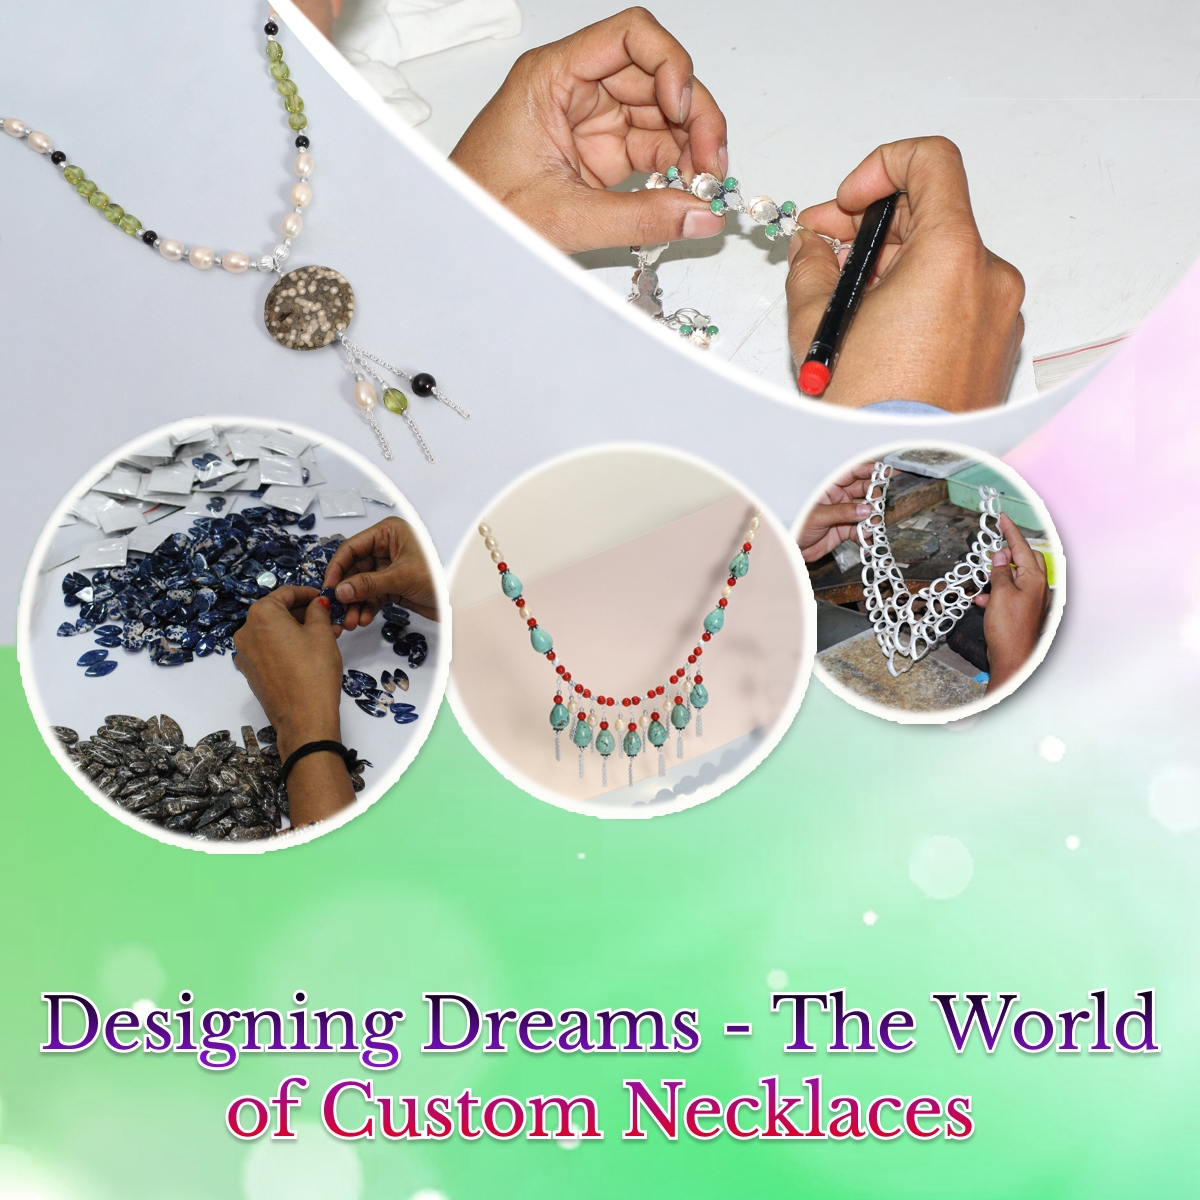 Custom Necklaces